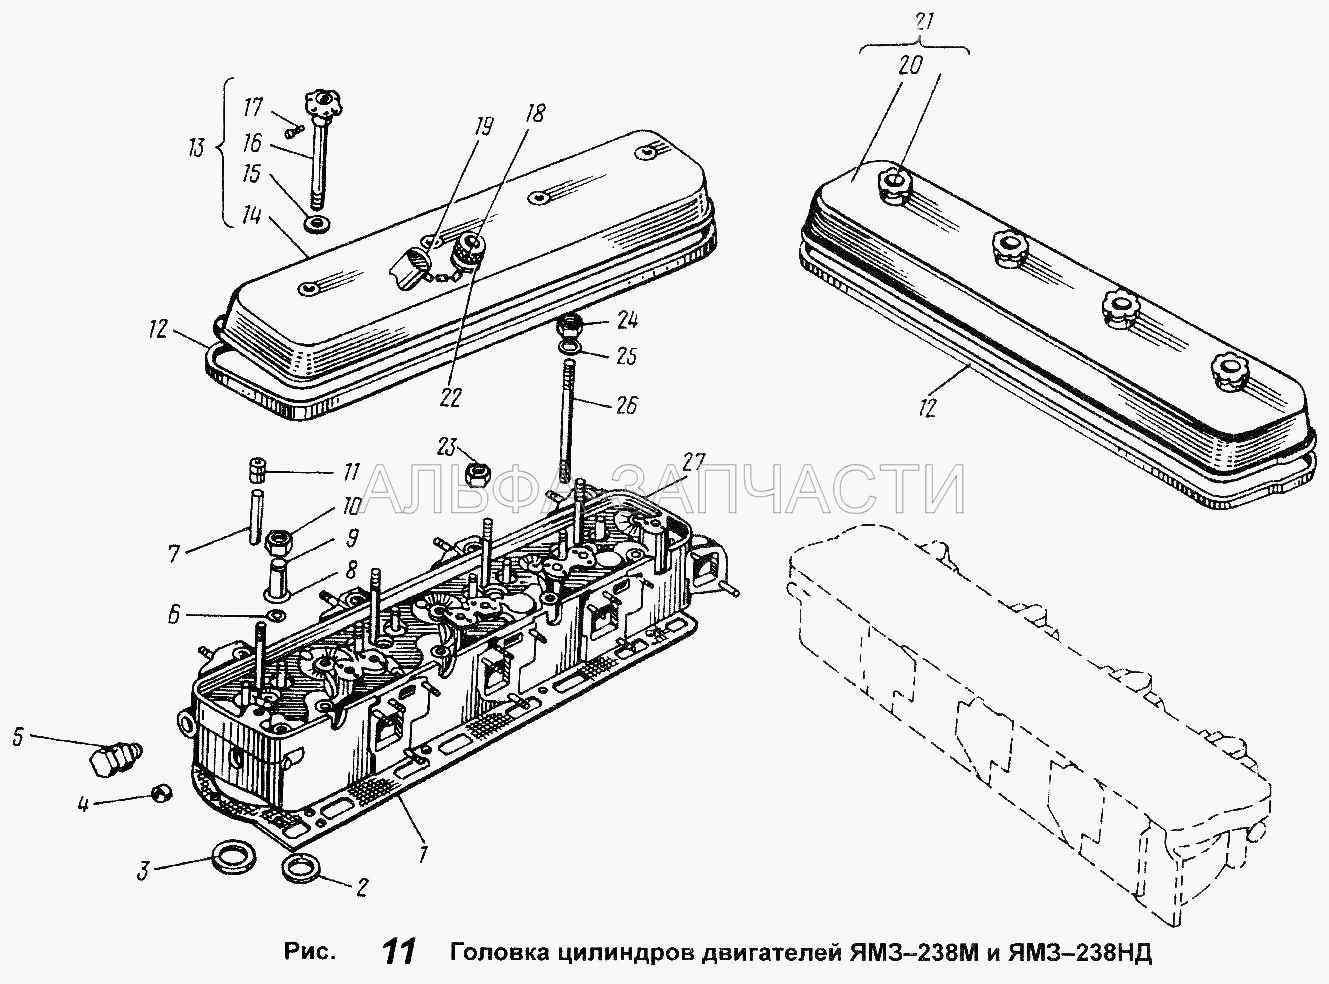 Головка цилиндров двигателей ЯМЗ-238М и ЯМЗ-238НД (236-1003112-В Стакан форсунки) 